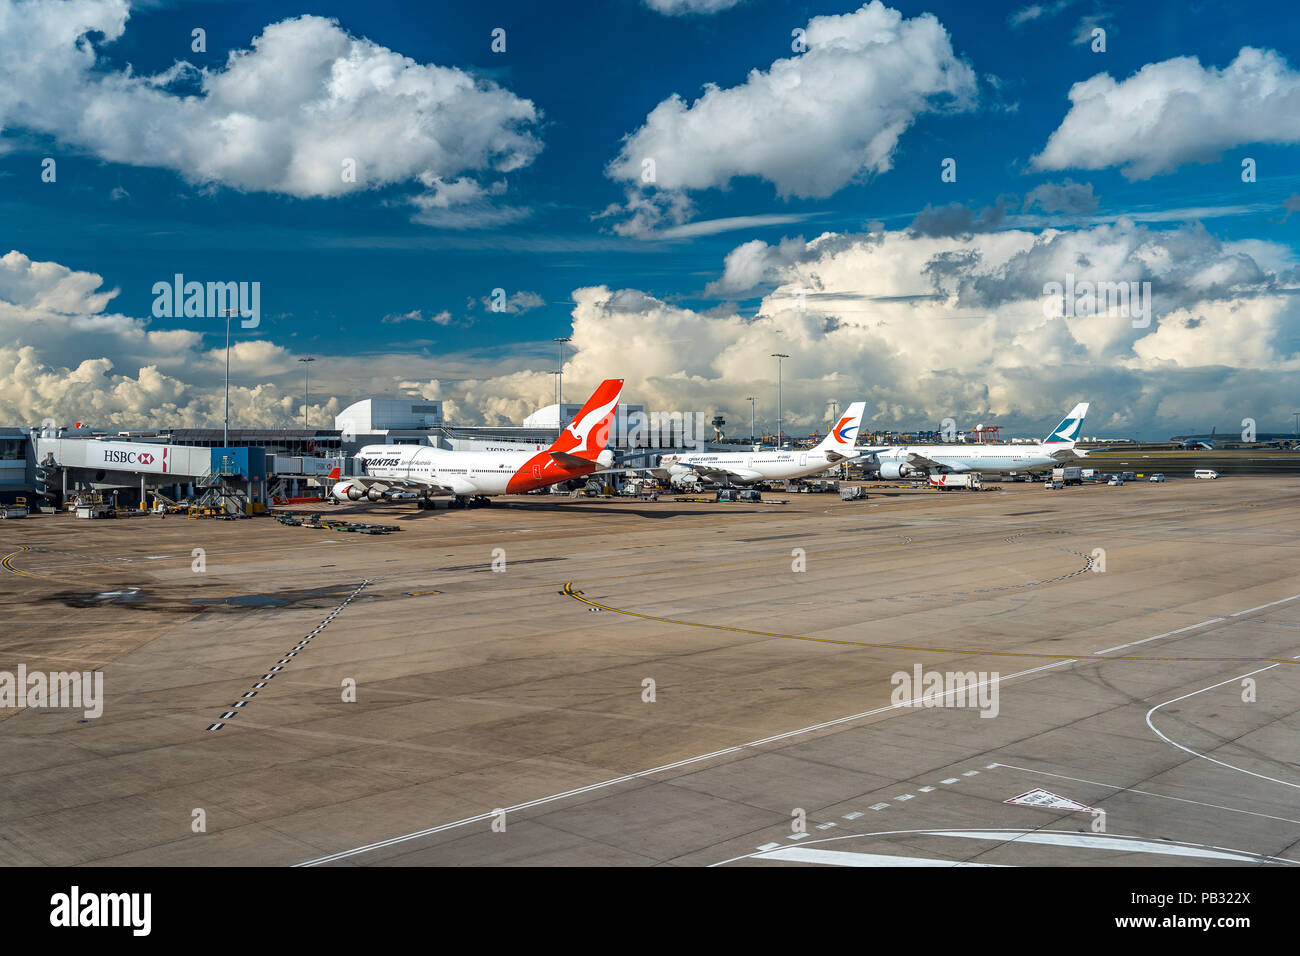 Sydney, Australia - Planes docked at the Sydney airport Stock Photo